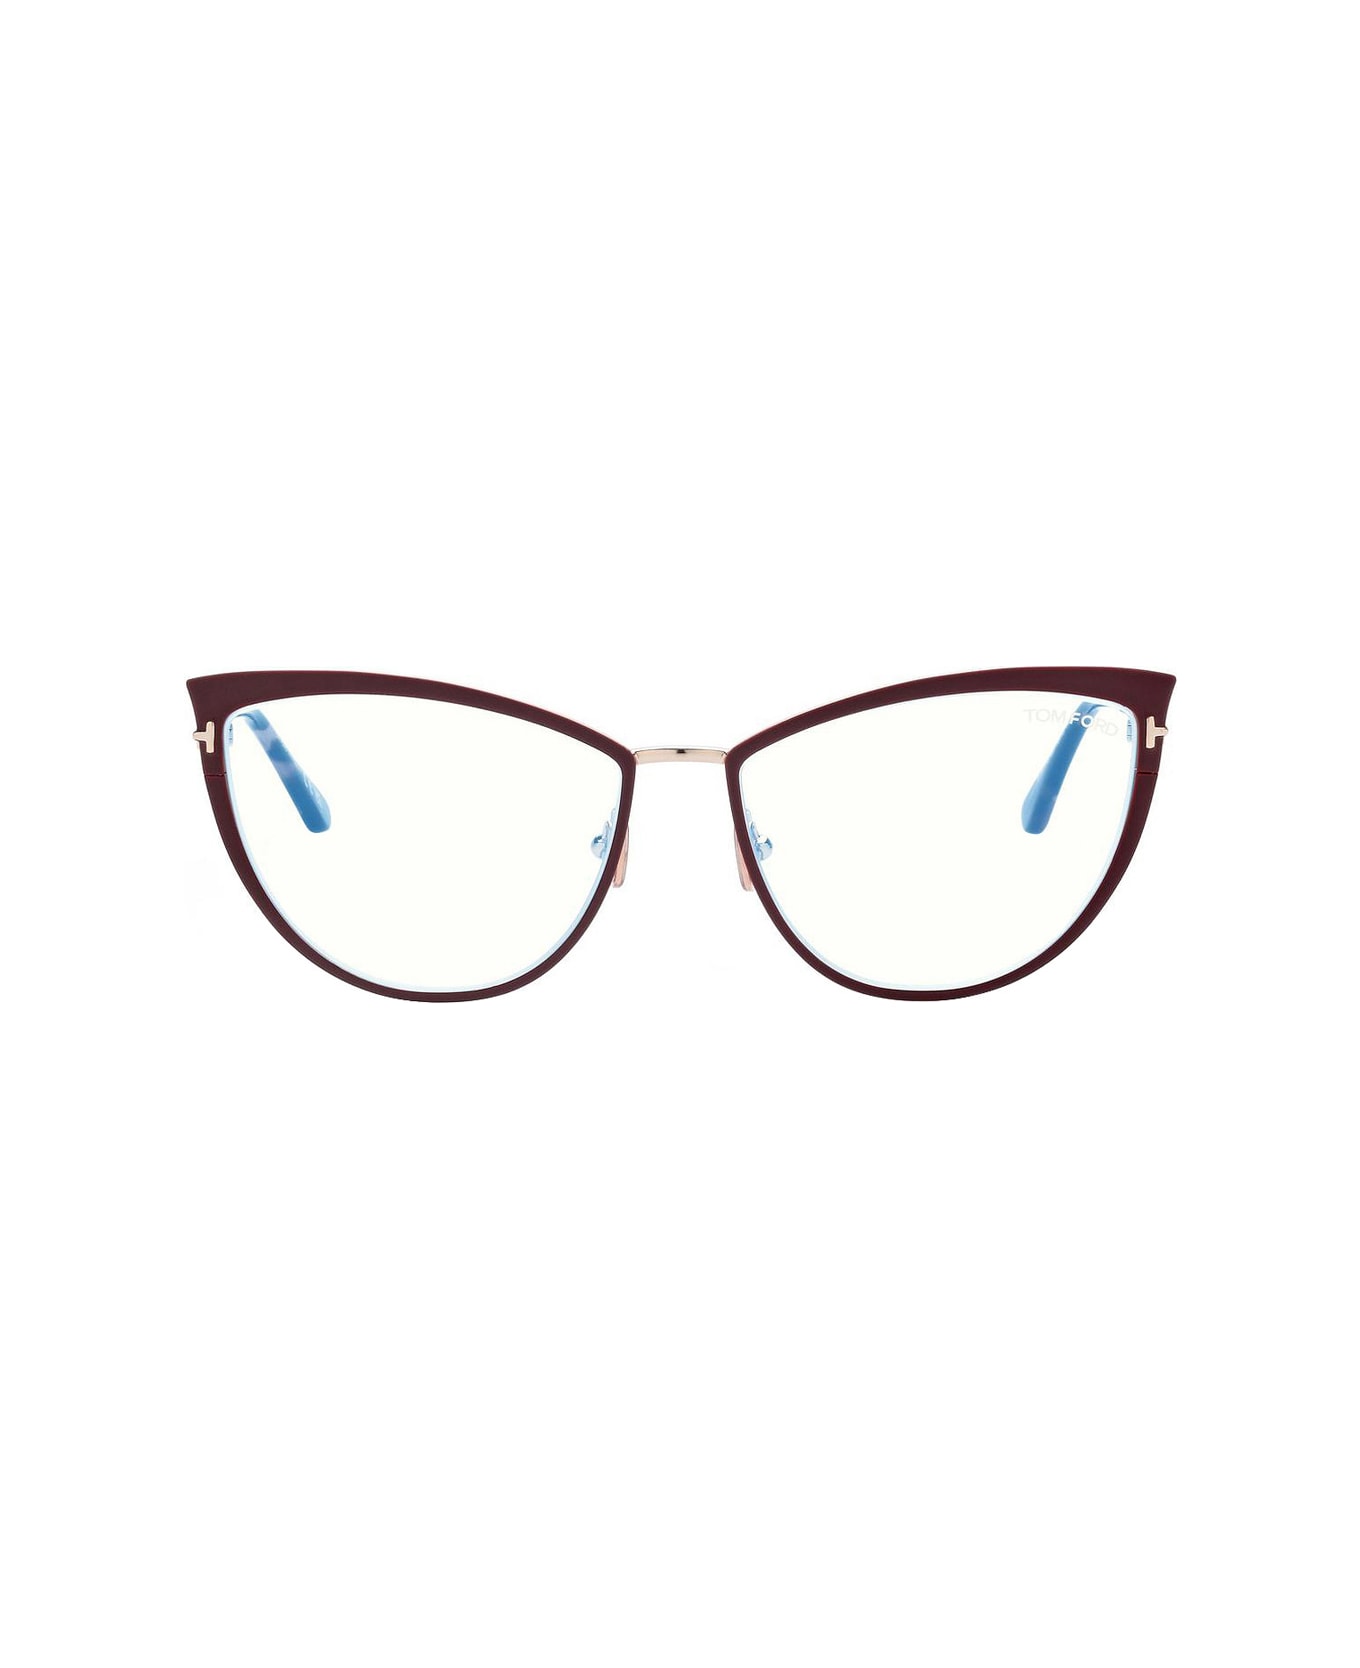 Tom Ford Eyewear Ft5877 069 Glasses - Rosso